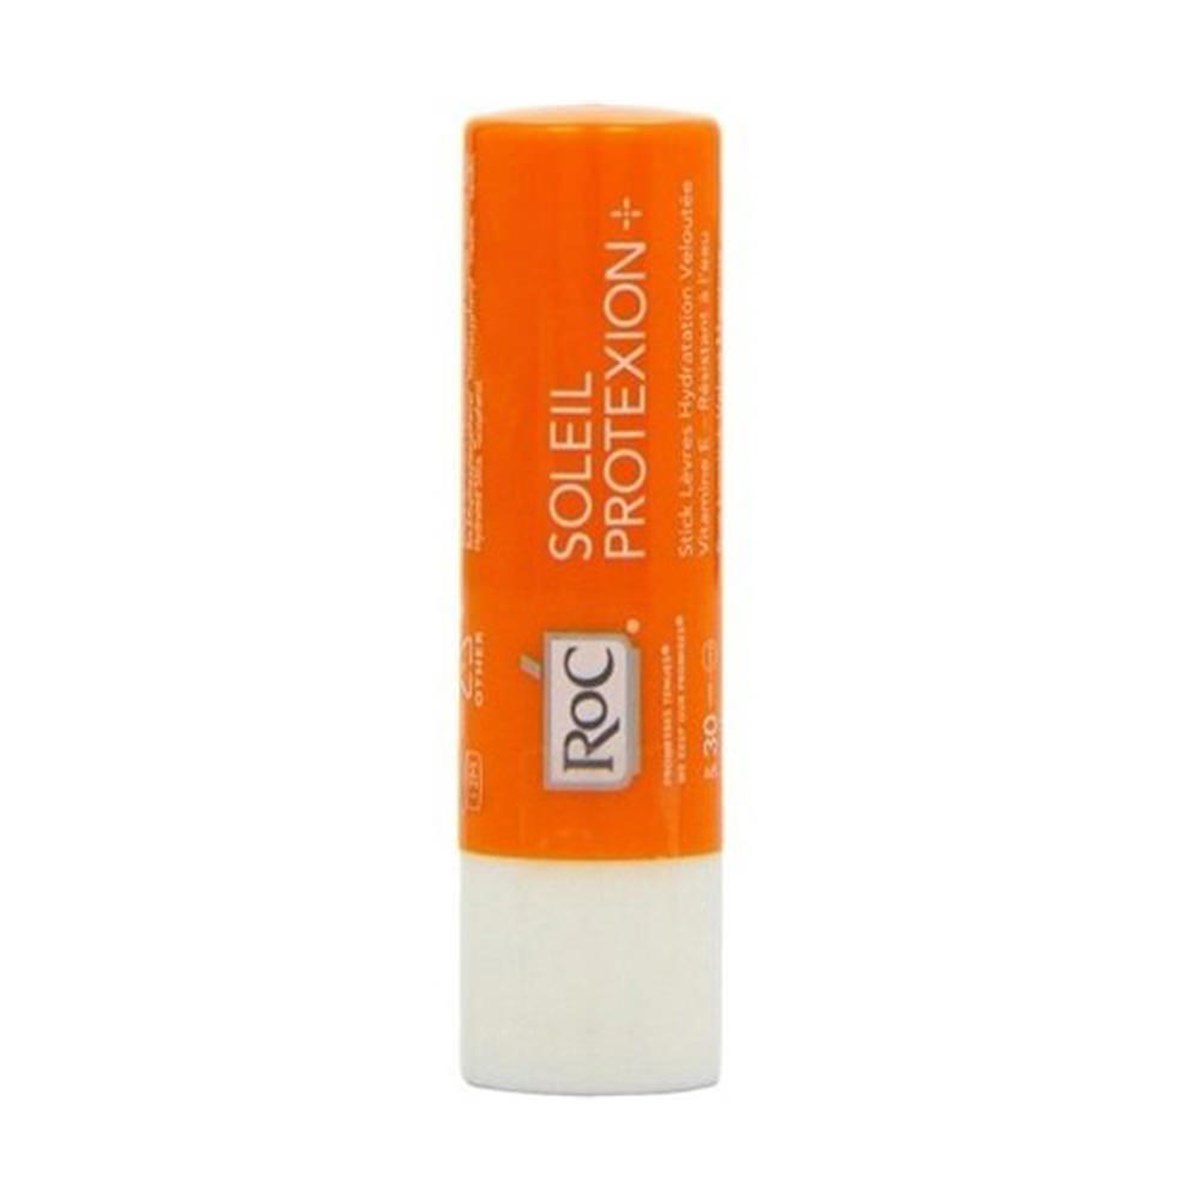 RoC Soleil Protexion Face Lipstick Spf 30 - Dudak Güneş Koruyucu Stick